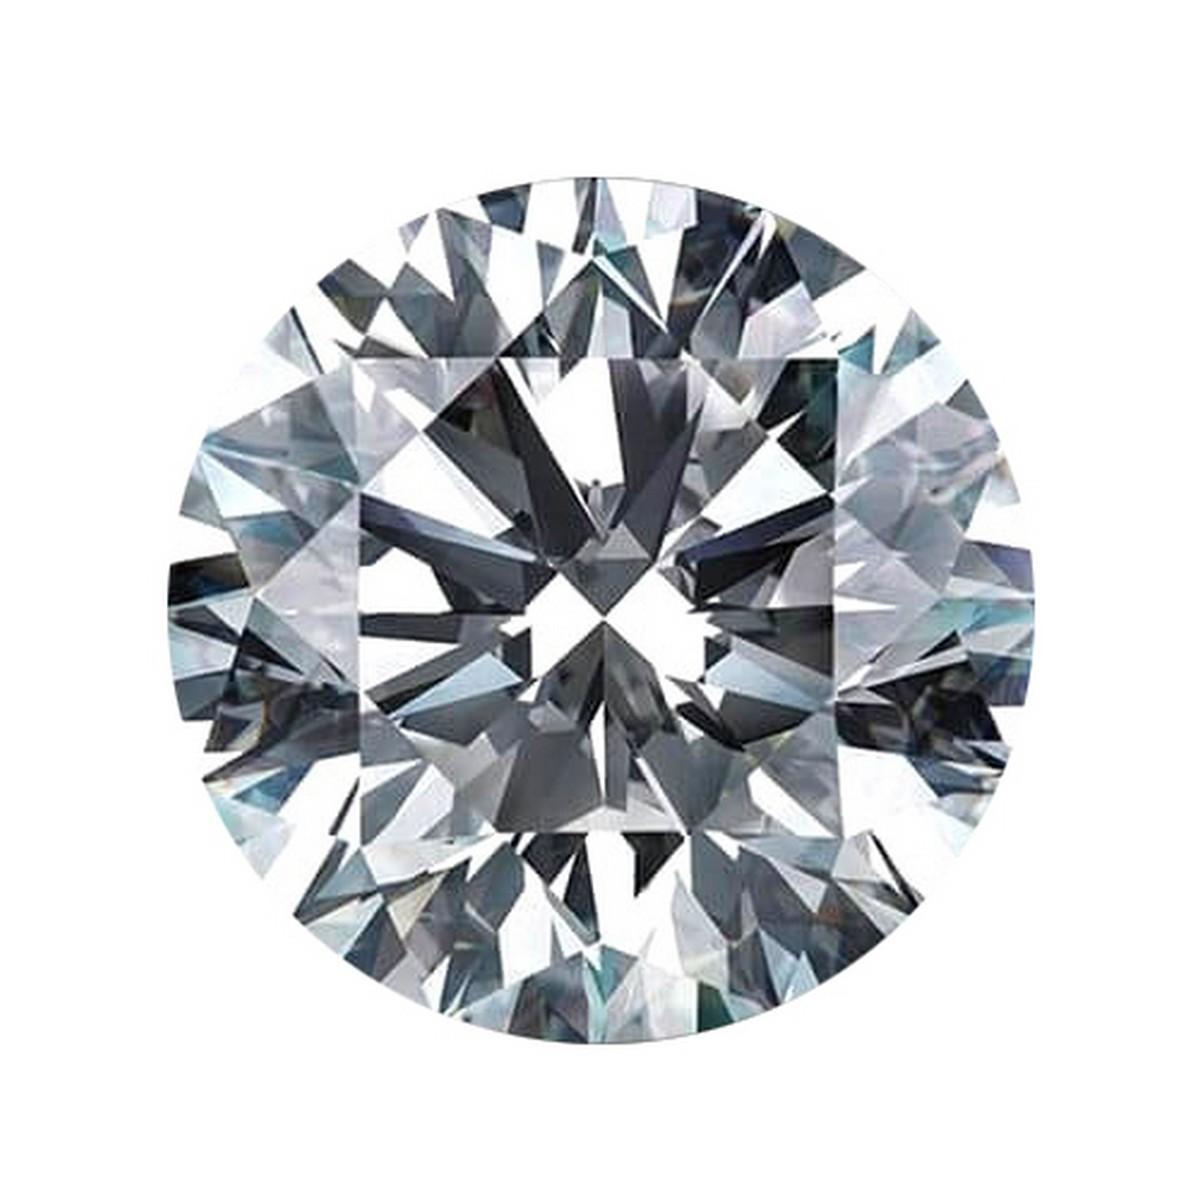 5.07 ctw. VVS2 IGI Certified Round Brilliant Cut Loose Diamond (LAB GROWN)